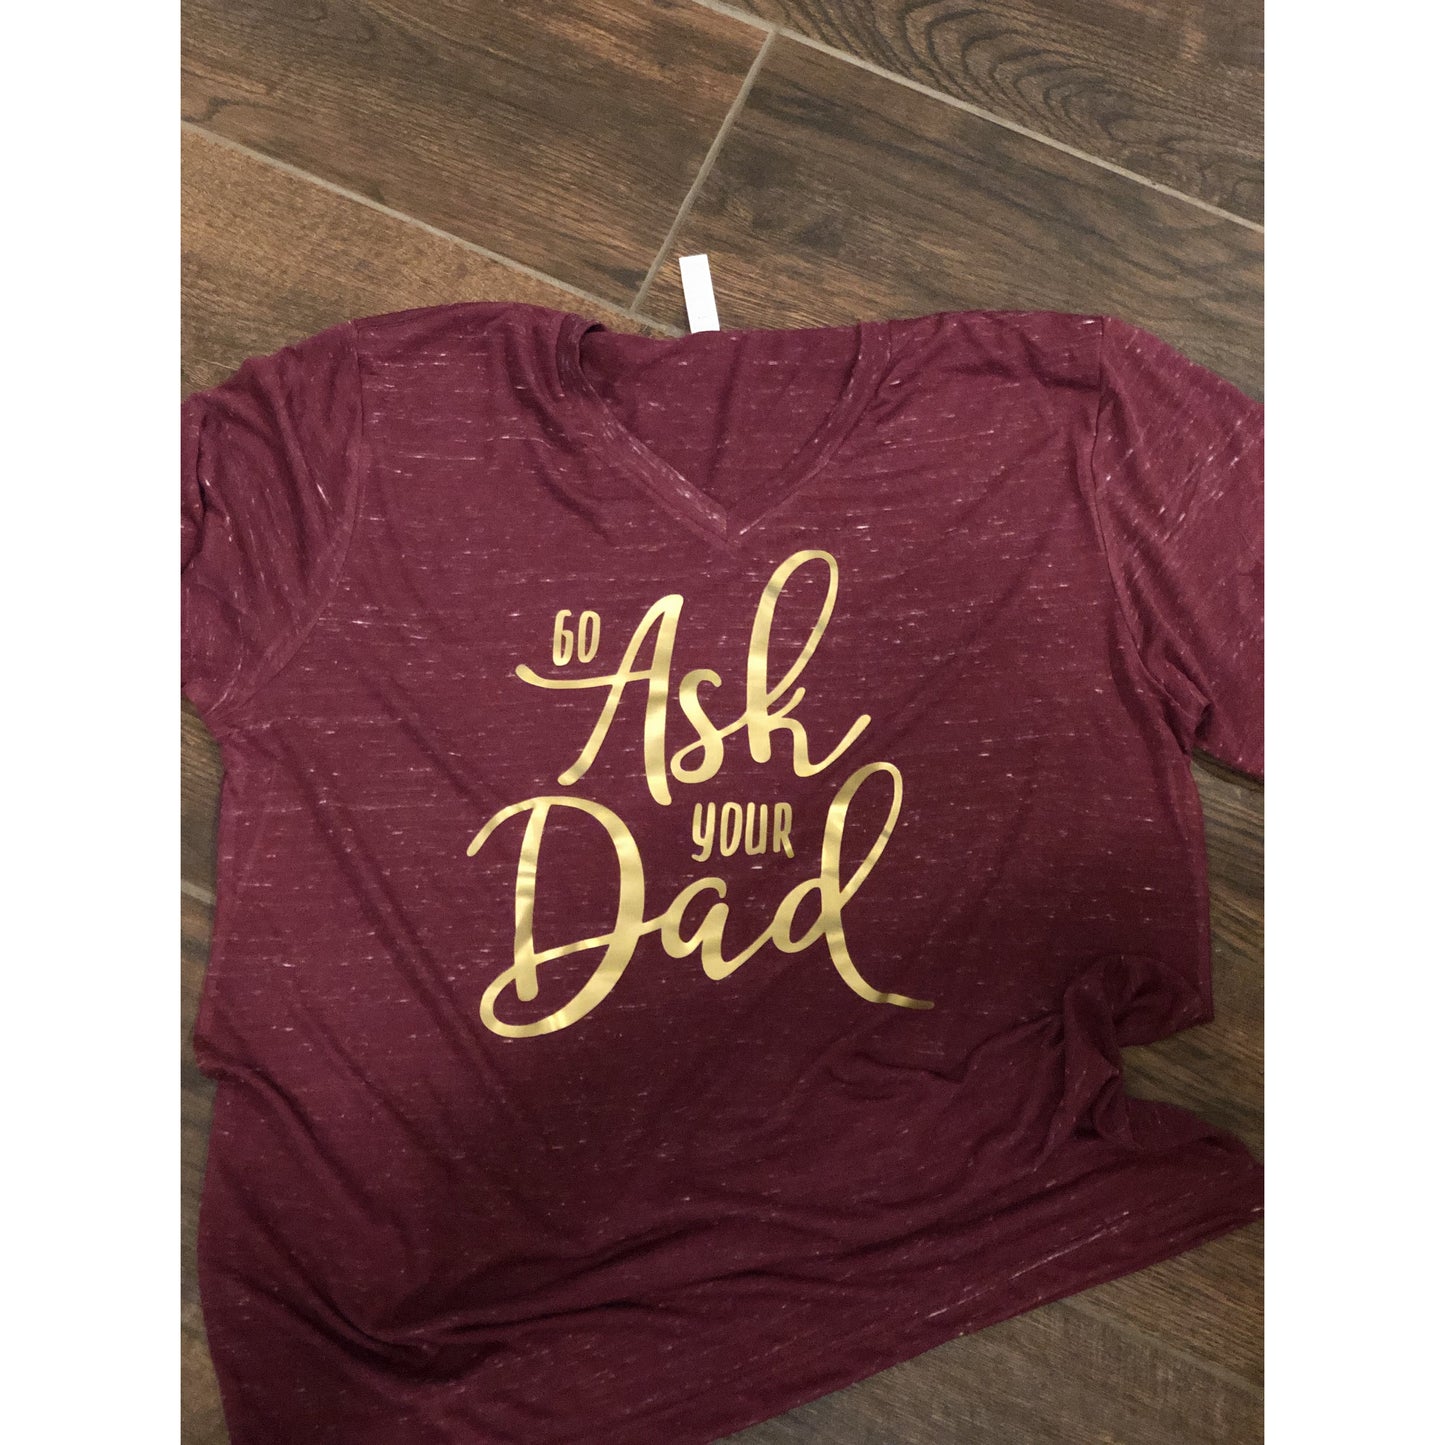 Go Ask Your Dad Thursday T-shirt!